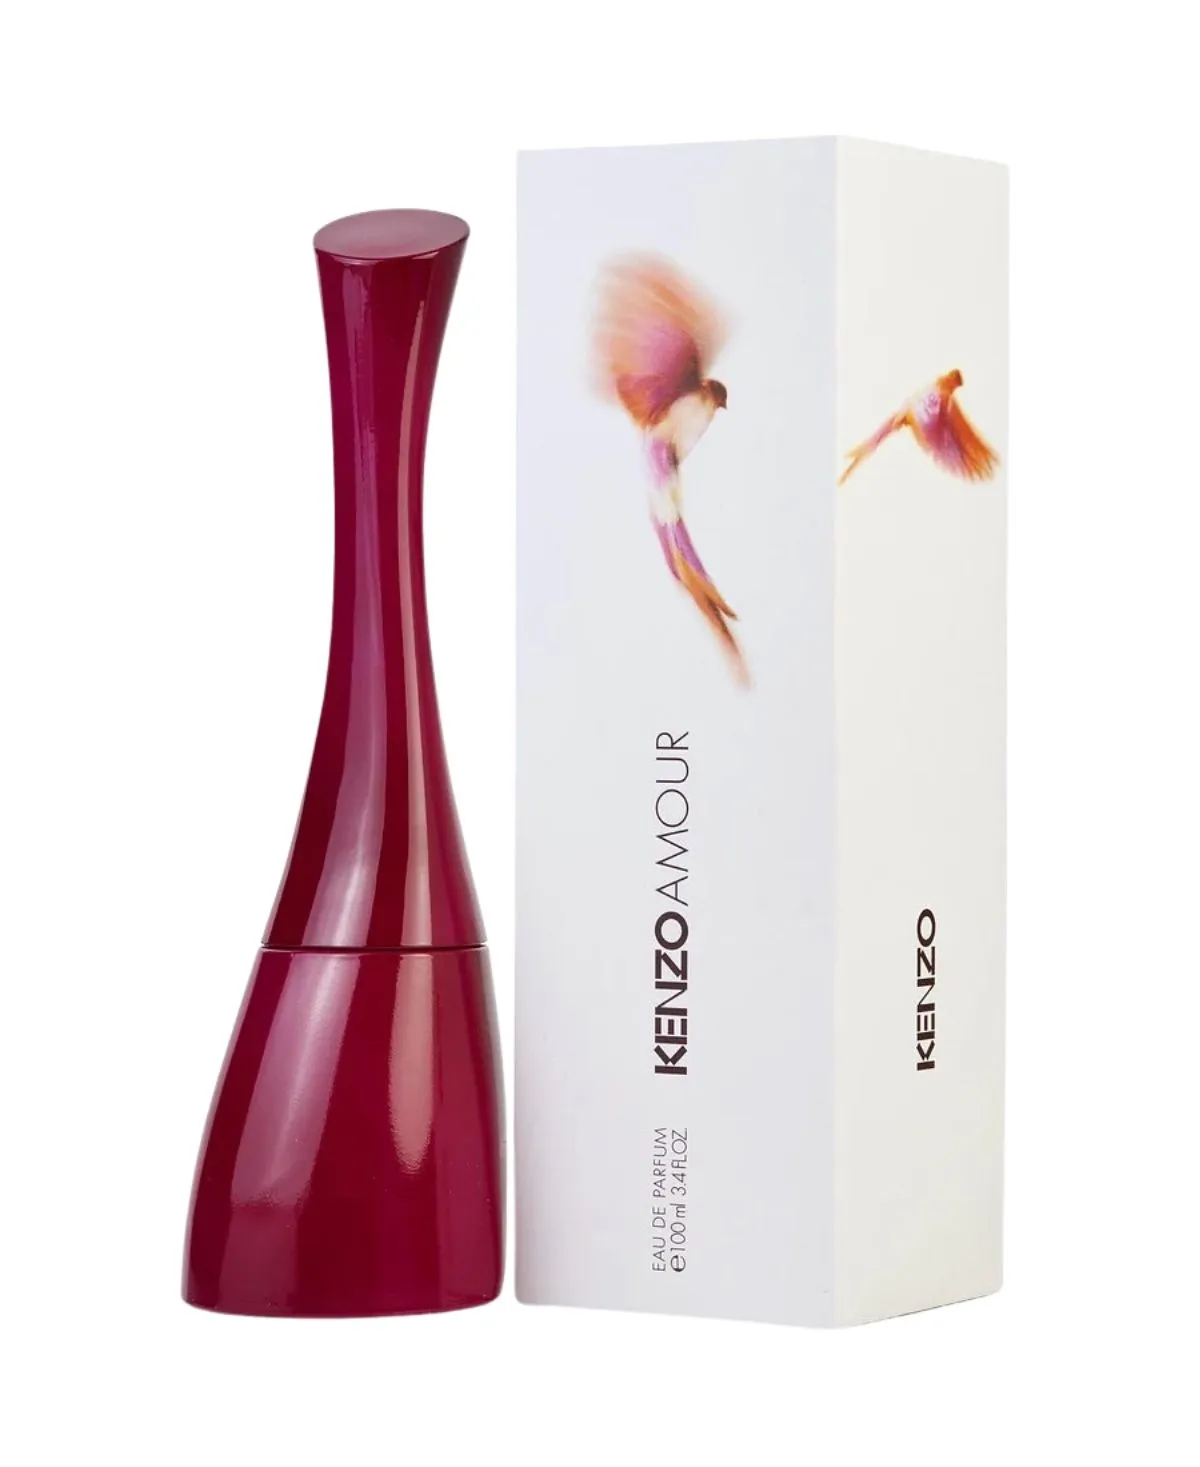 Kenzo Amour for Women Eau de Parfum (EDP) Spray 3.4 oz (100 ml) 3274872420625